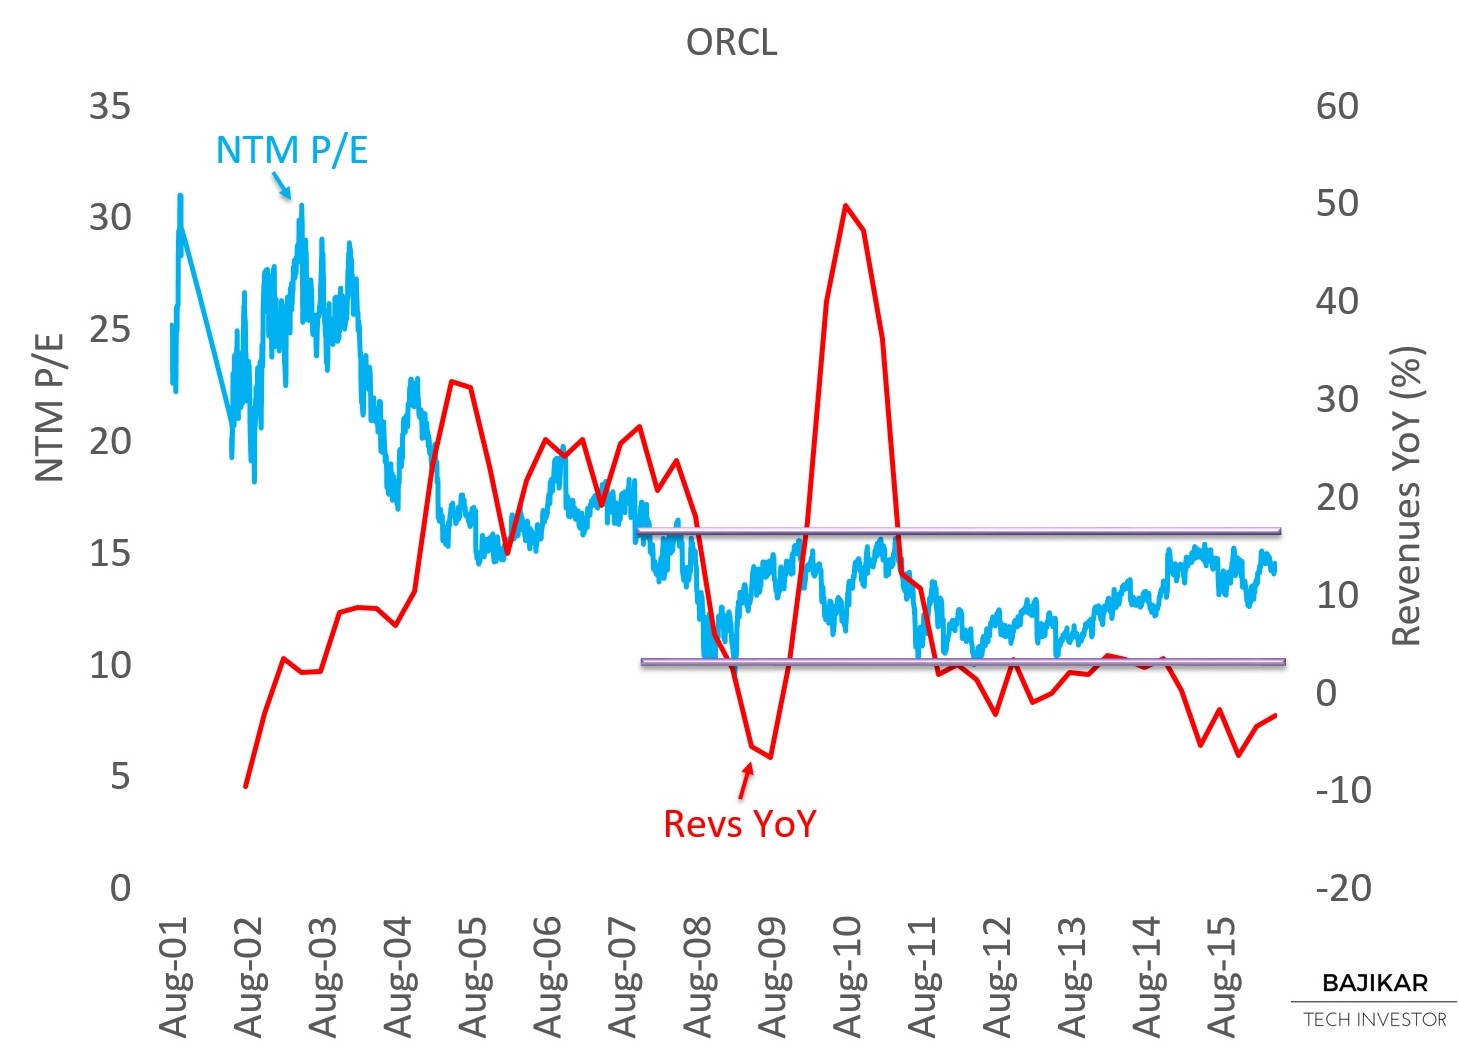 ORCL P/E NTM vs. Revenues YoY